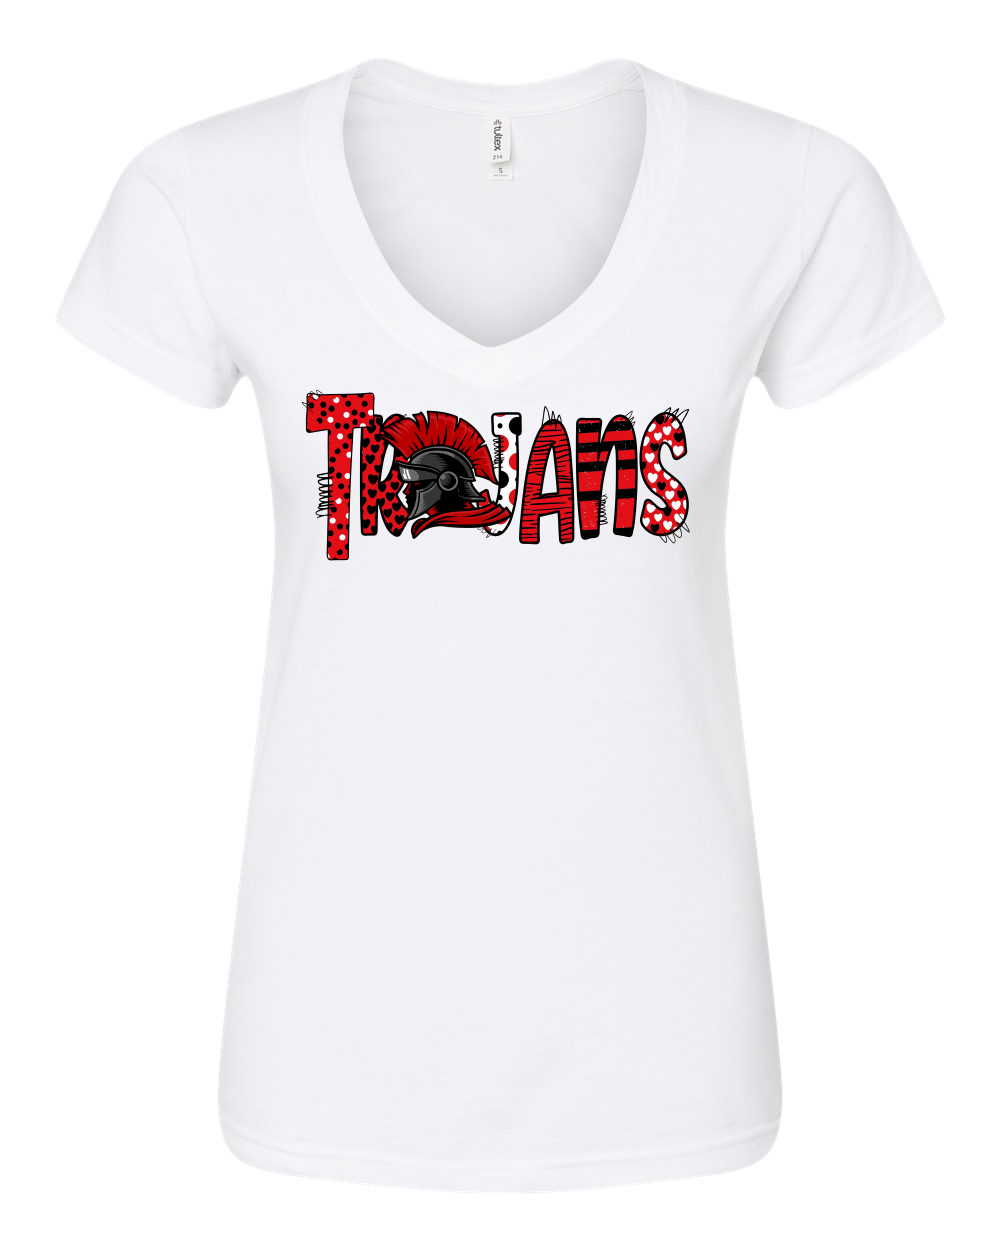 Lady Trojans Shirt - CGHC